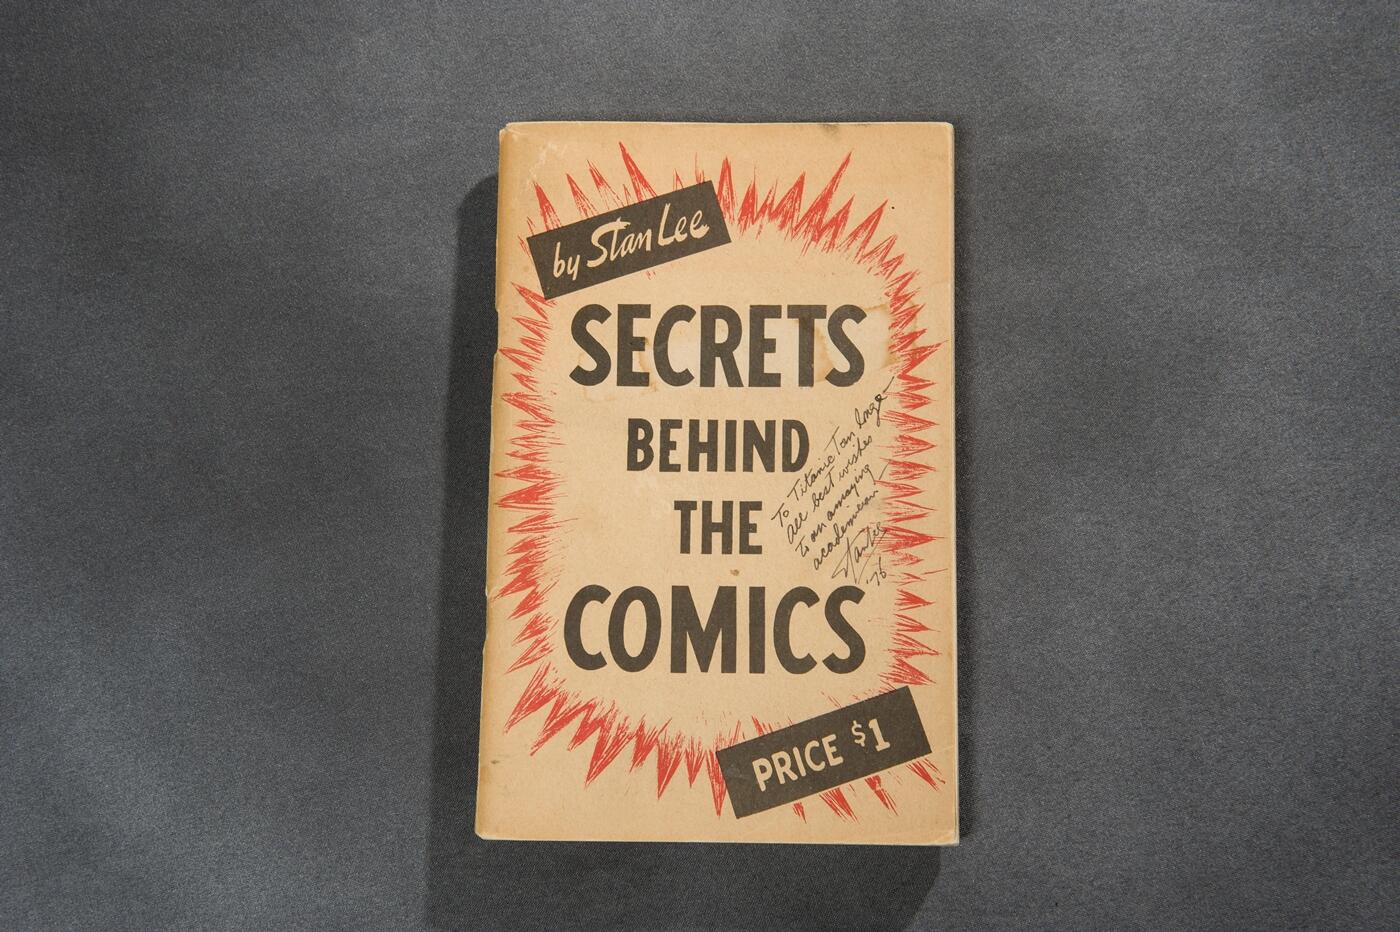 Stan Lee's book "Secret's Behind the Comics."